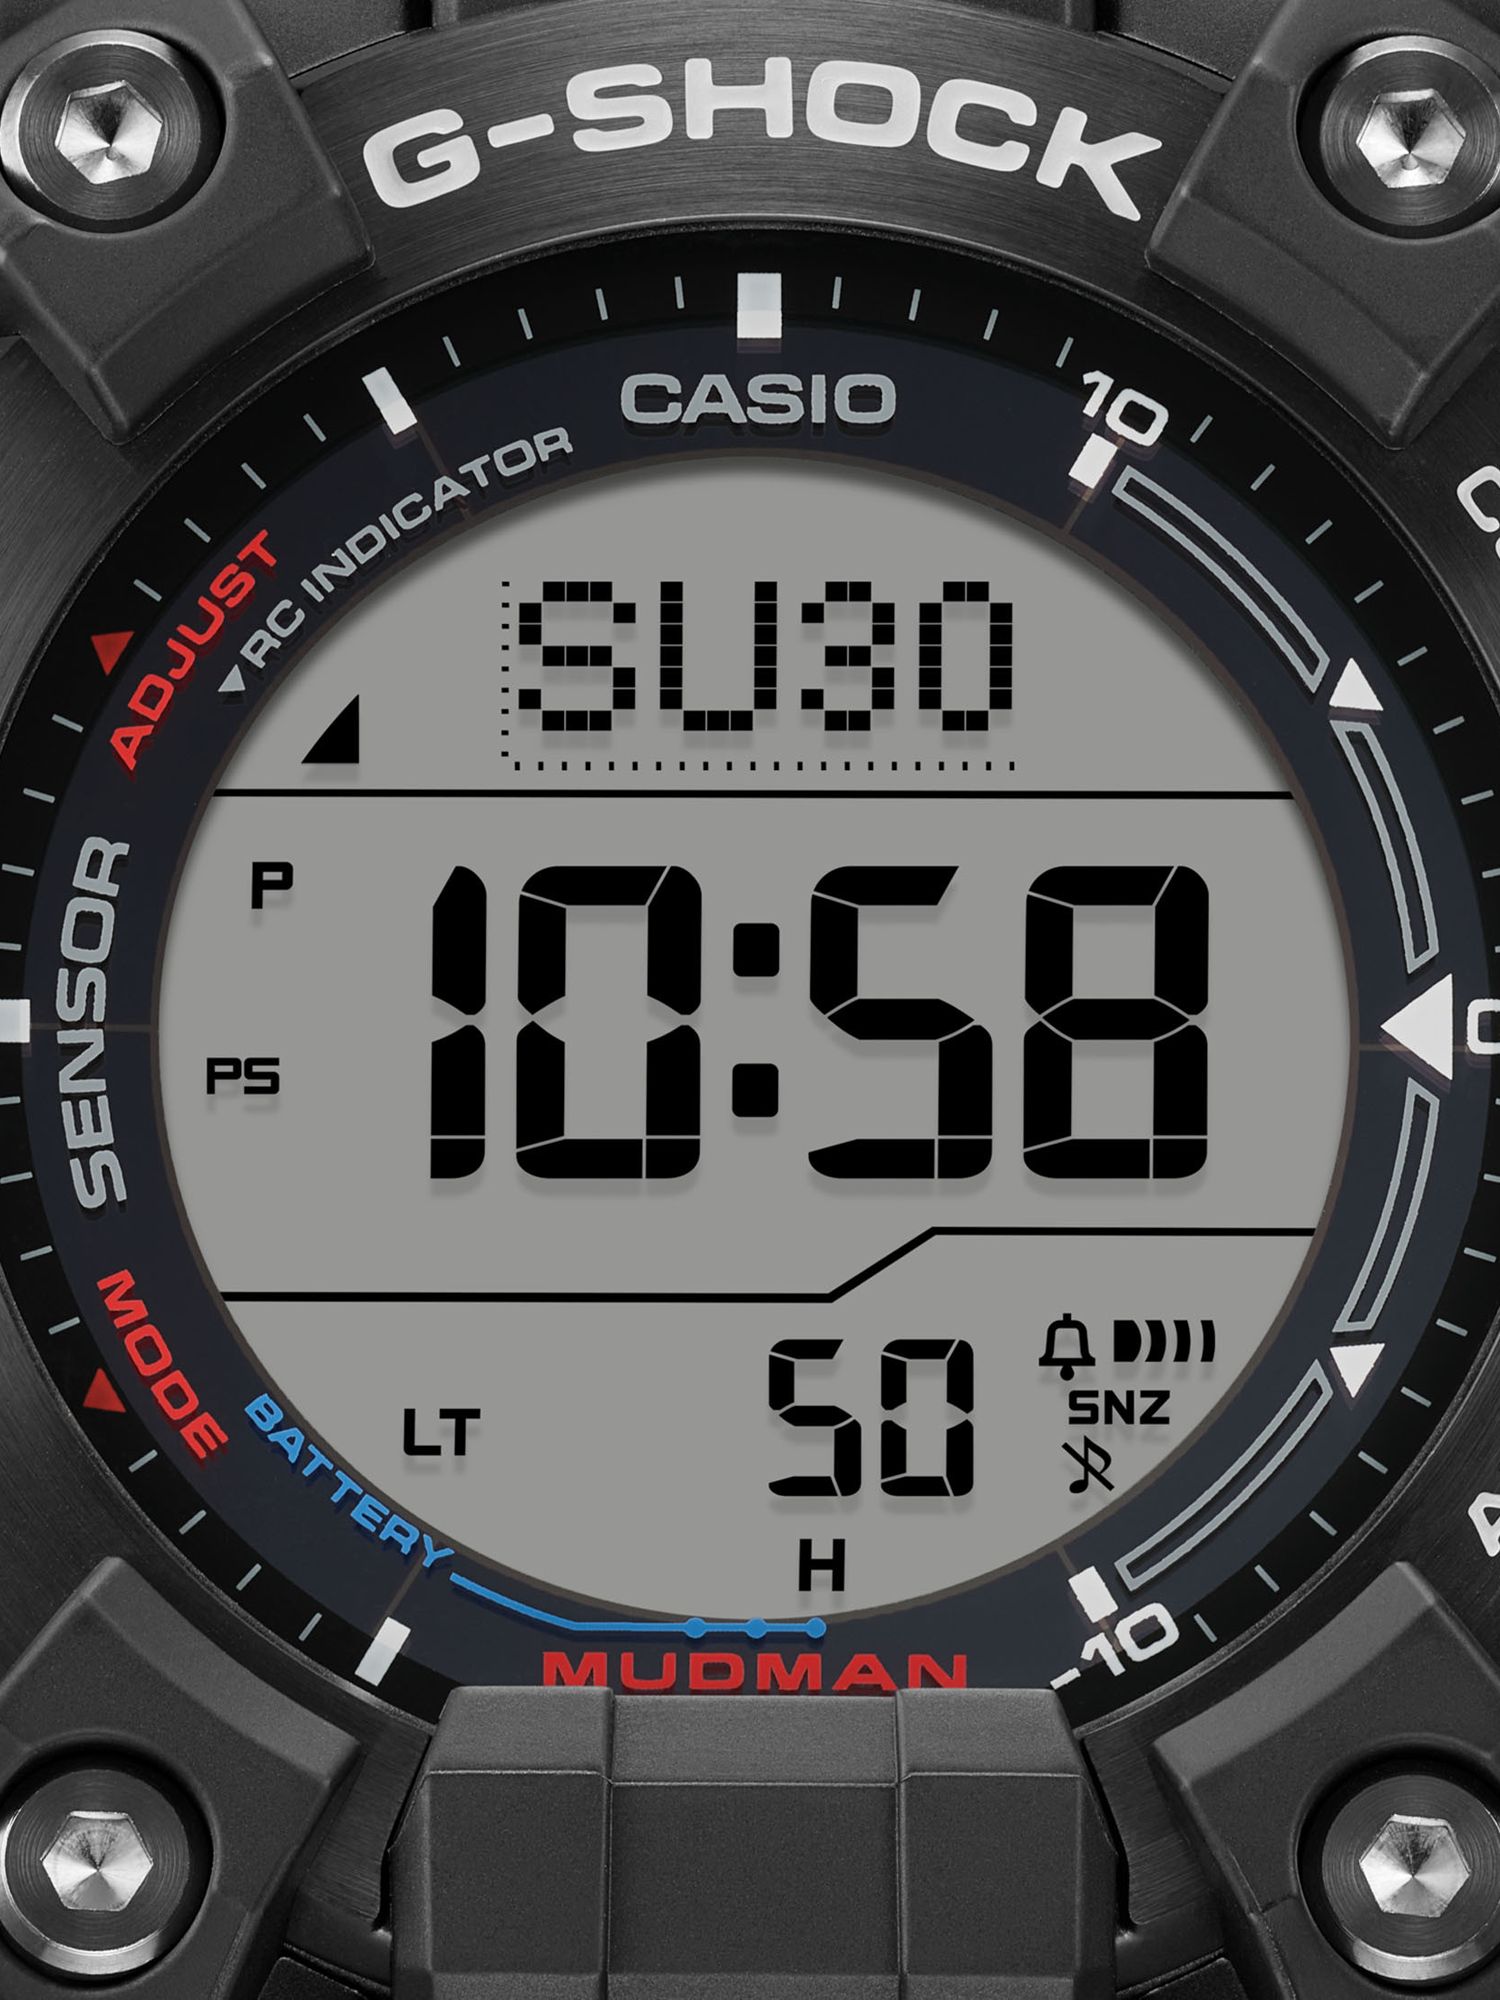 Buy Casio GW-9500TLC-1ER Men's G-Shock Limited Edition Toyota Land Cruiser Mudman Solar Resin Strap Watch, Black Online at johnlewis.com